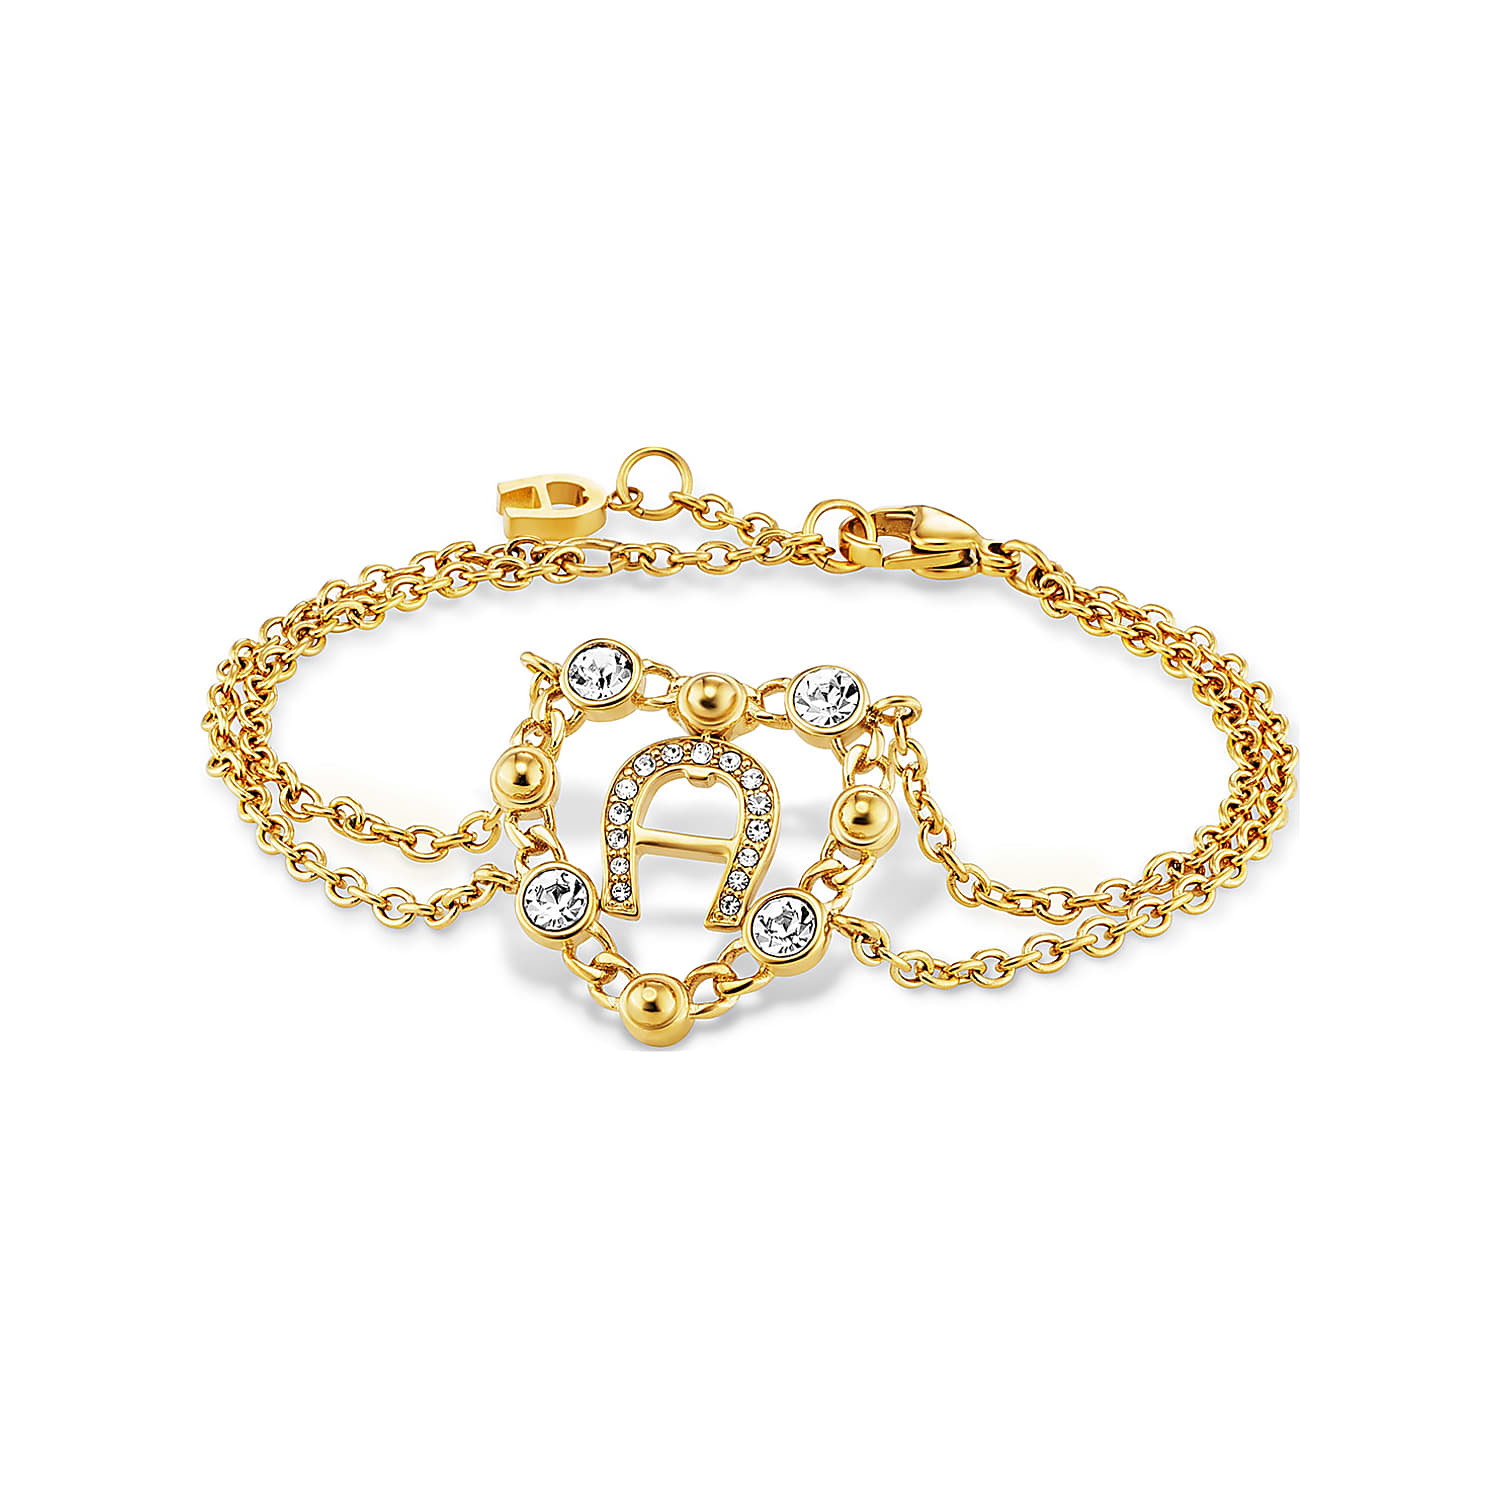 Bracelet with logo-heart pendant